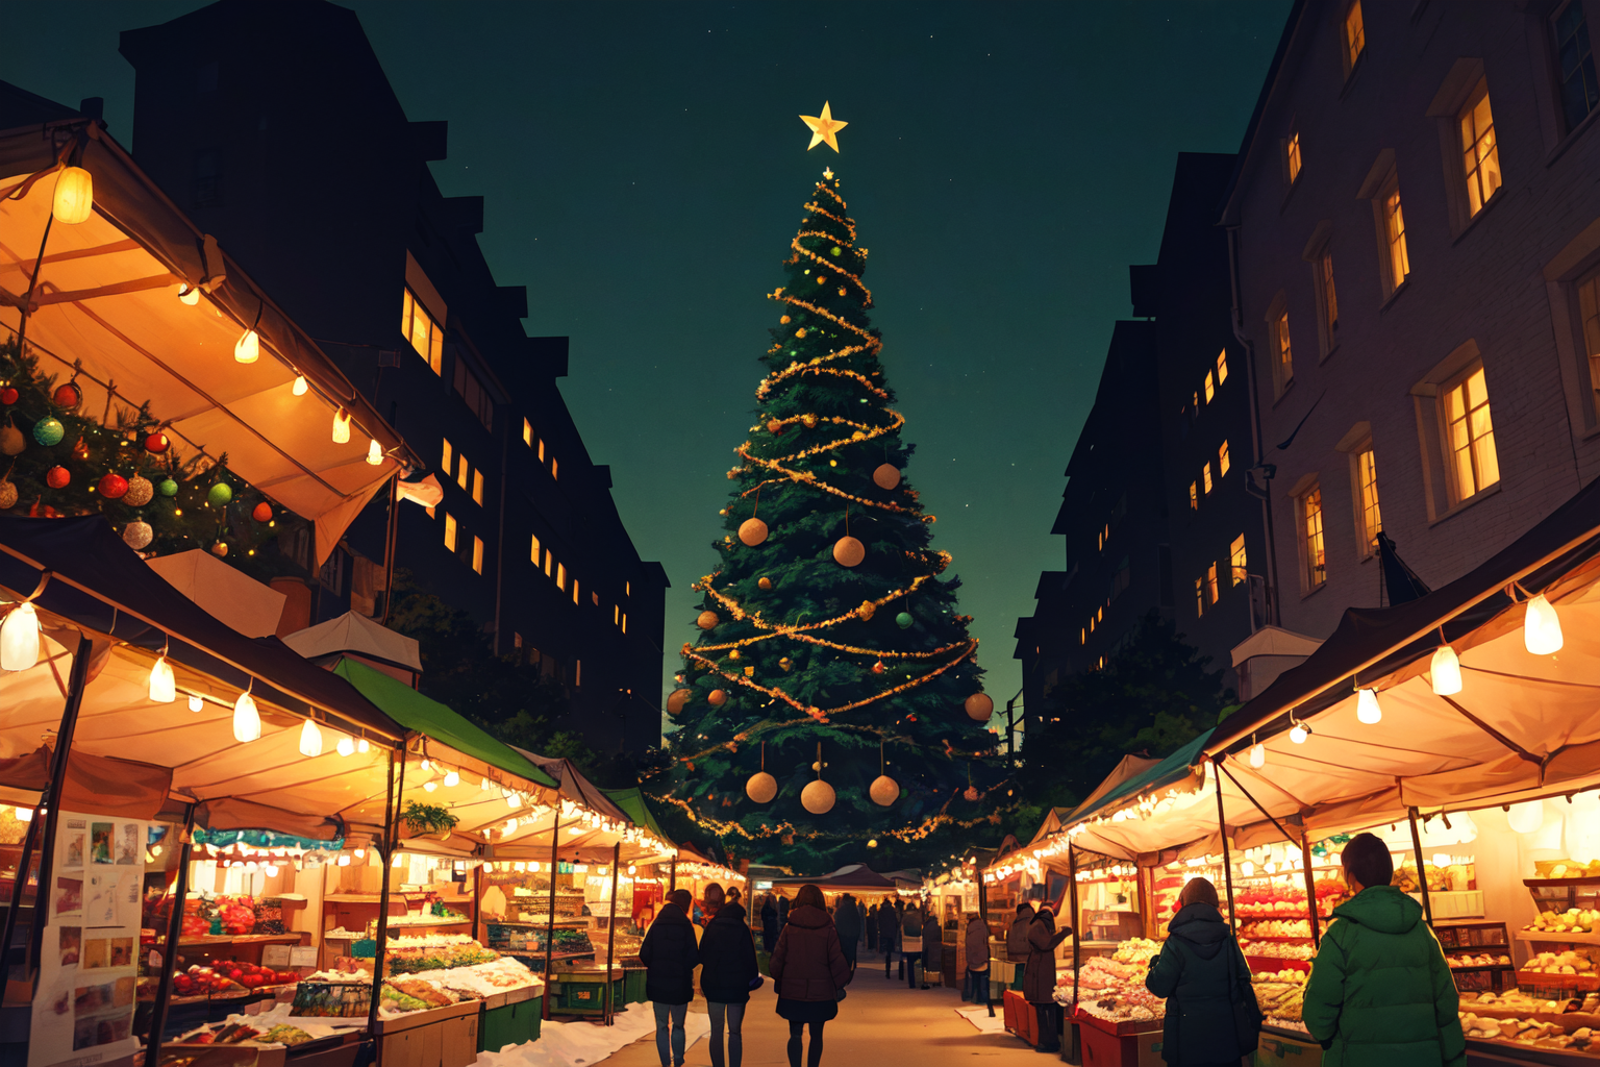 Winter Market image by duskfallcrew